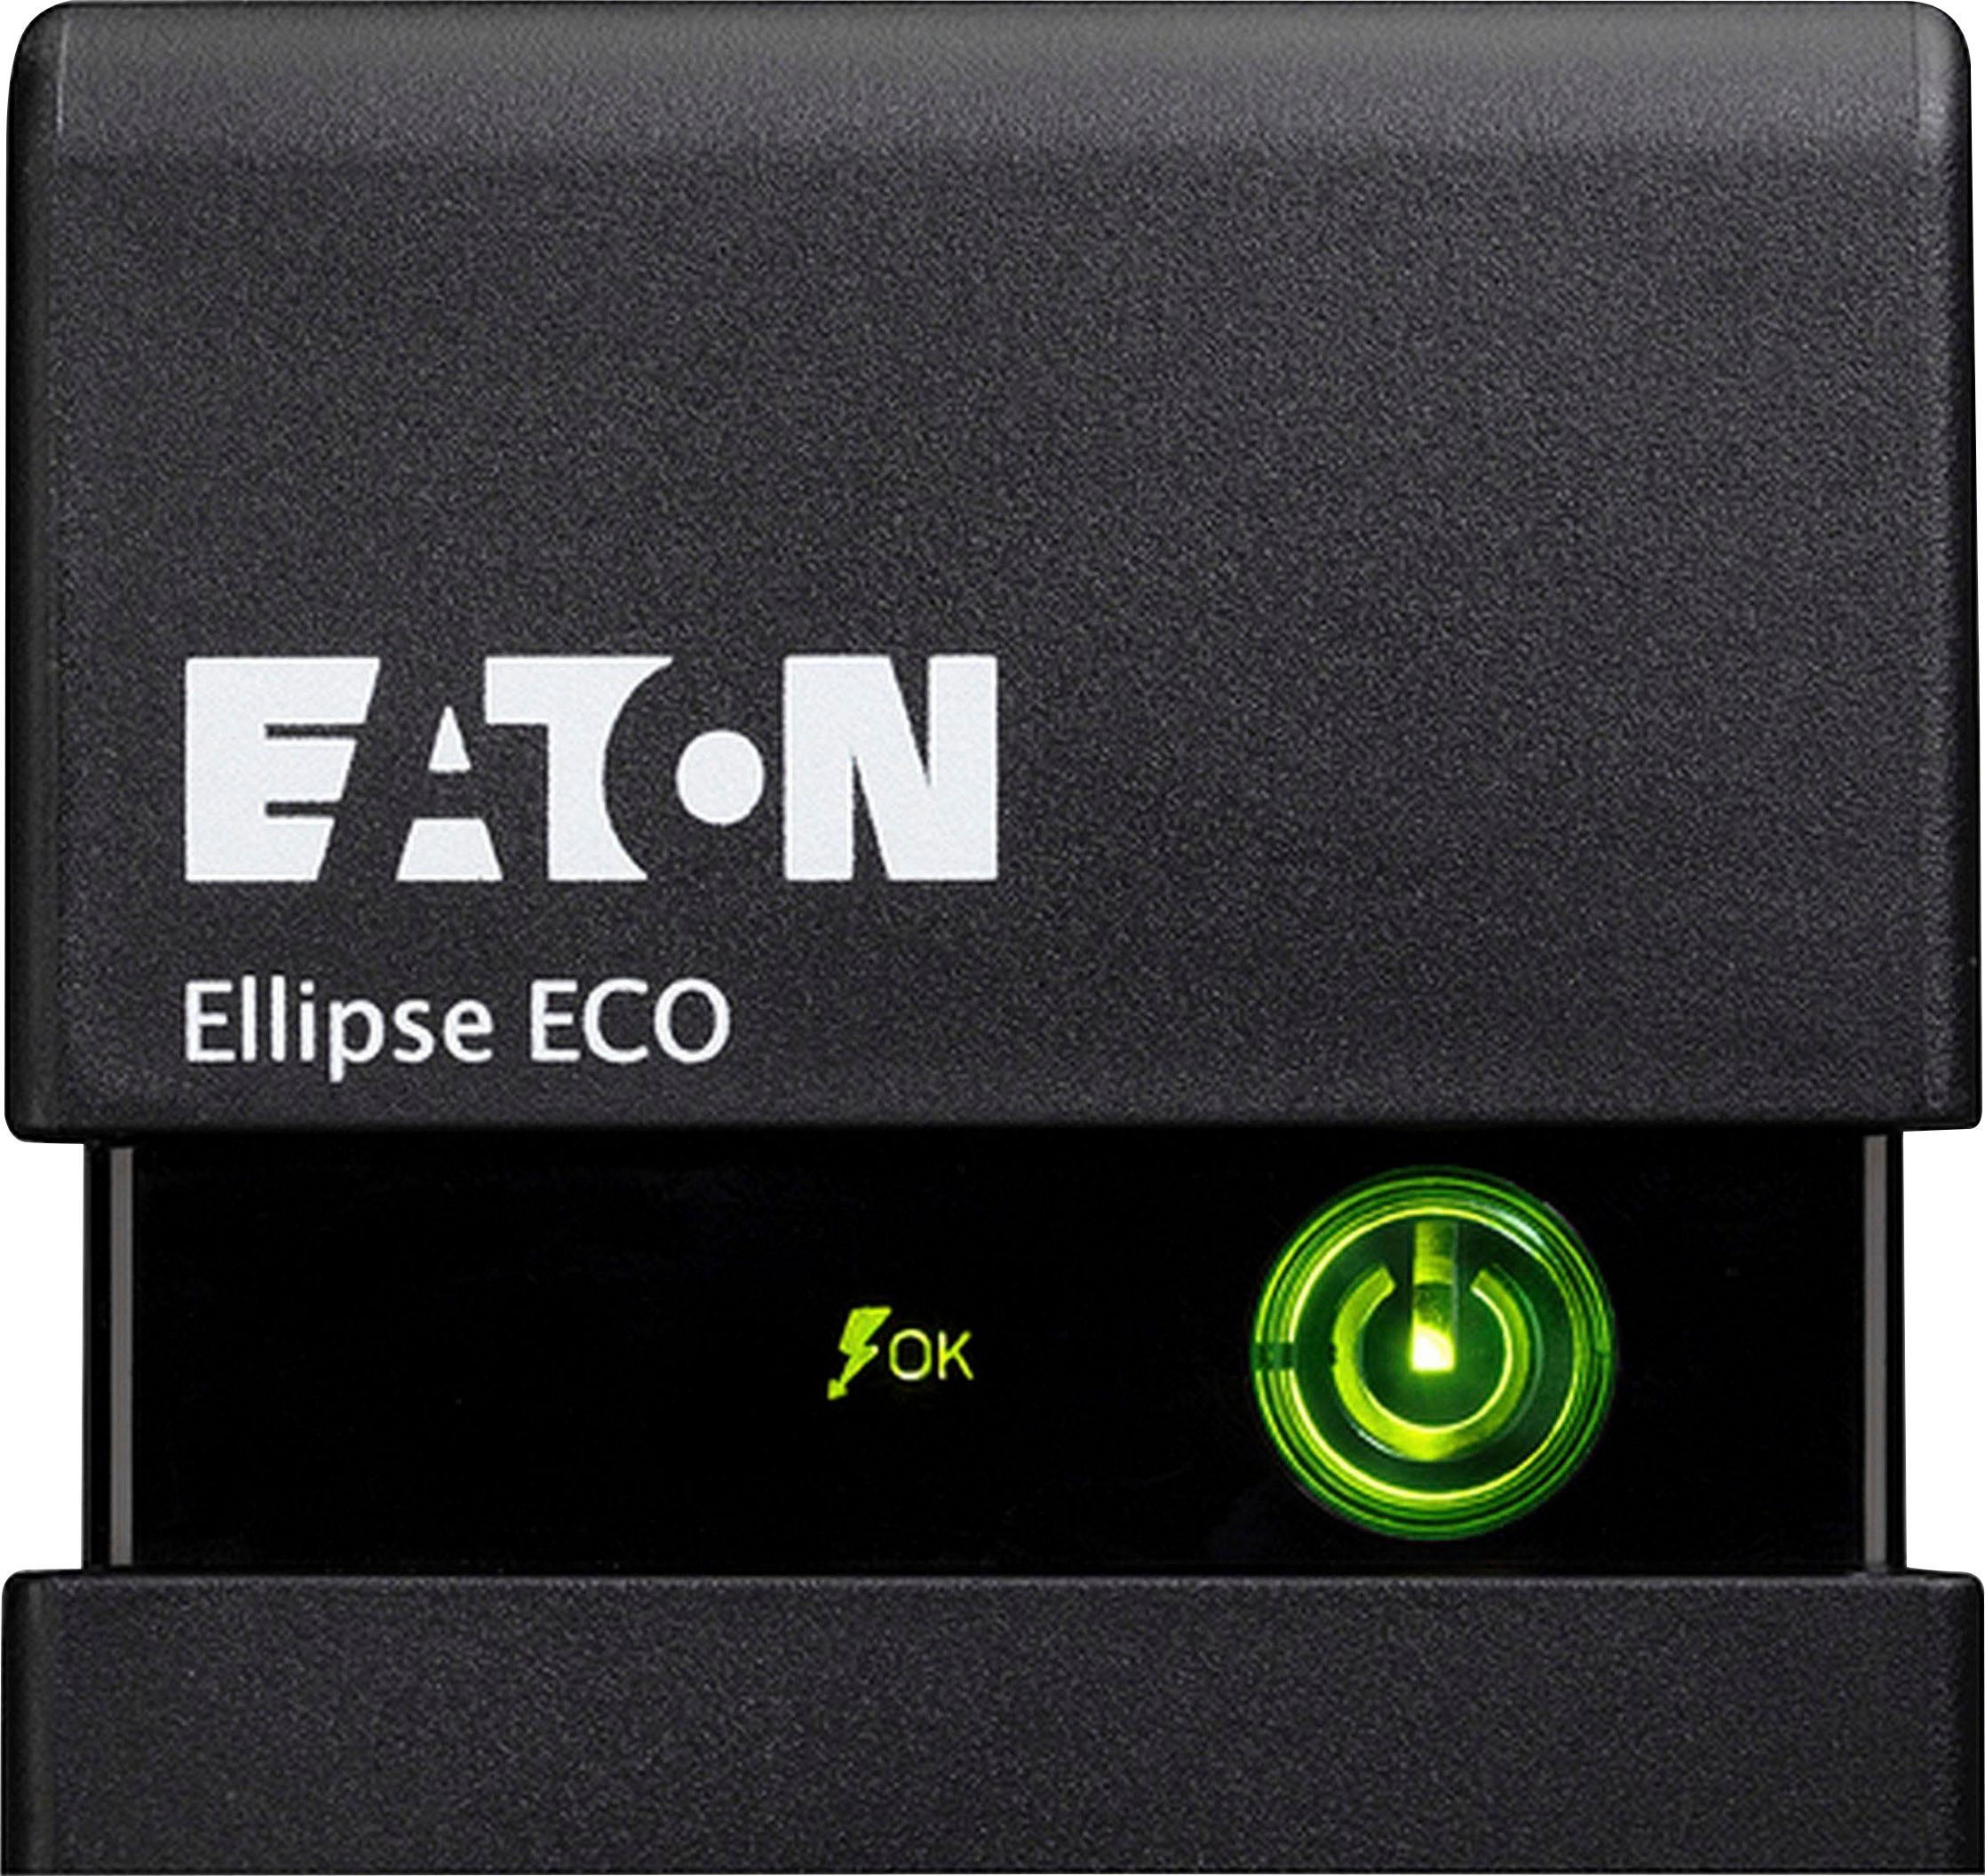 USB 800 EATON Ellipse DIN USV-Anlage ECO